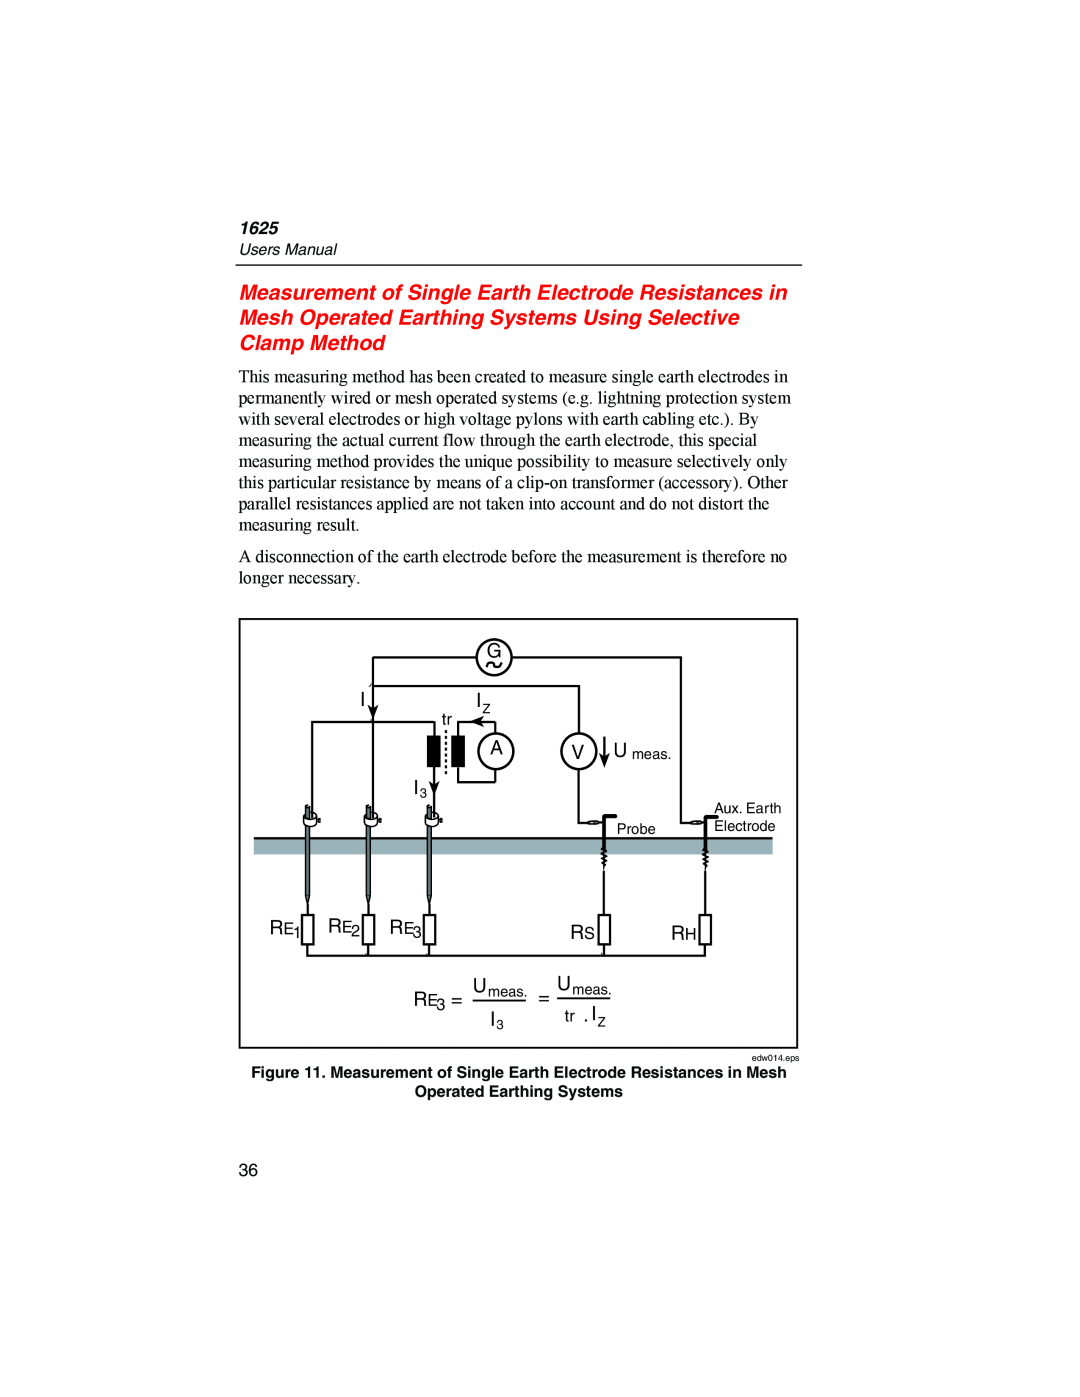 Fluke 1625 user manual Measurement of Single Earth Electrode Resistances in, tr . IZ 